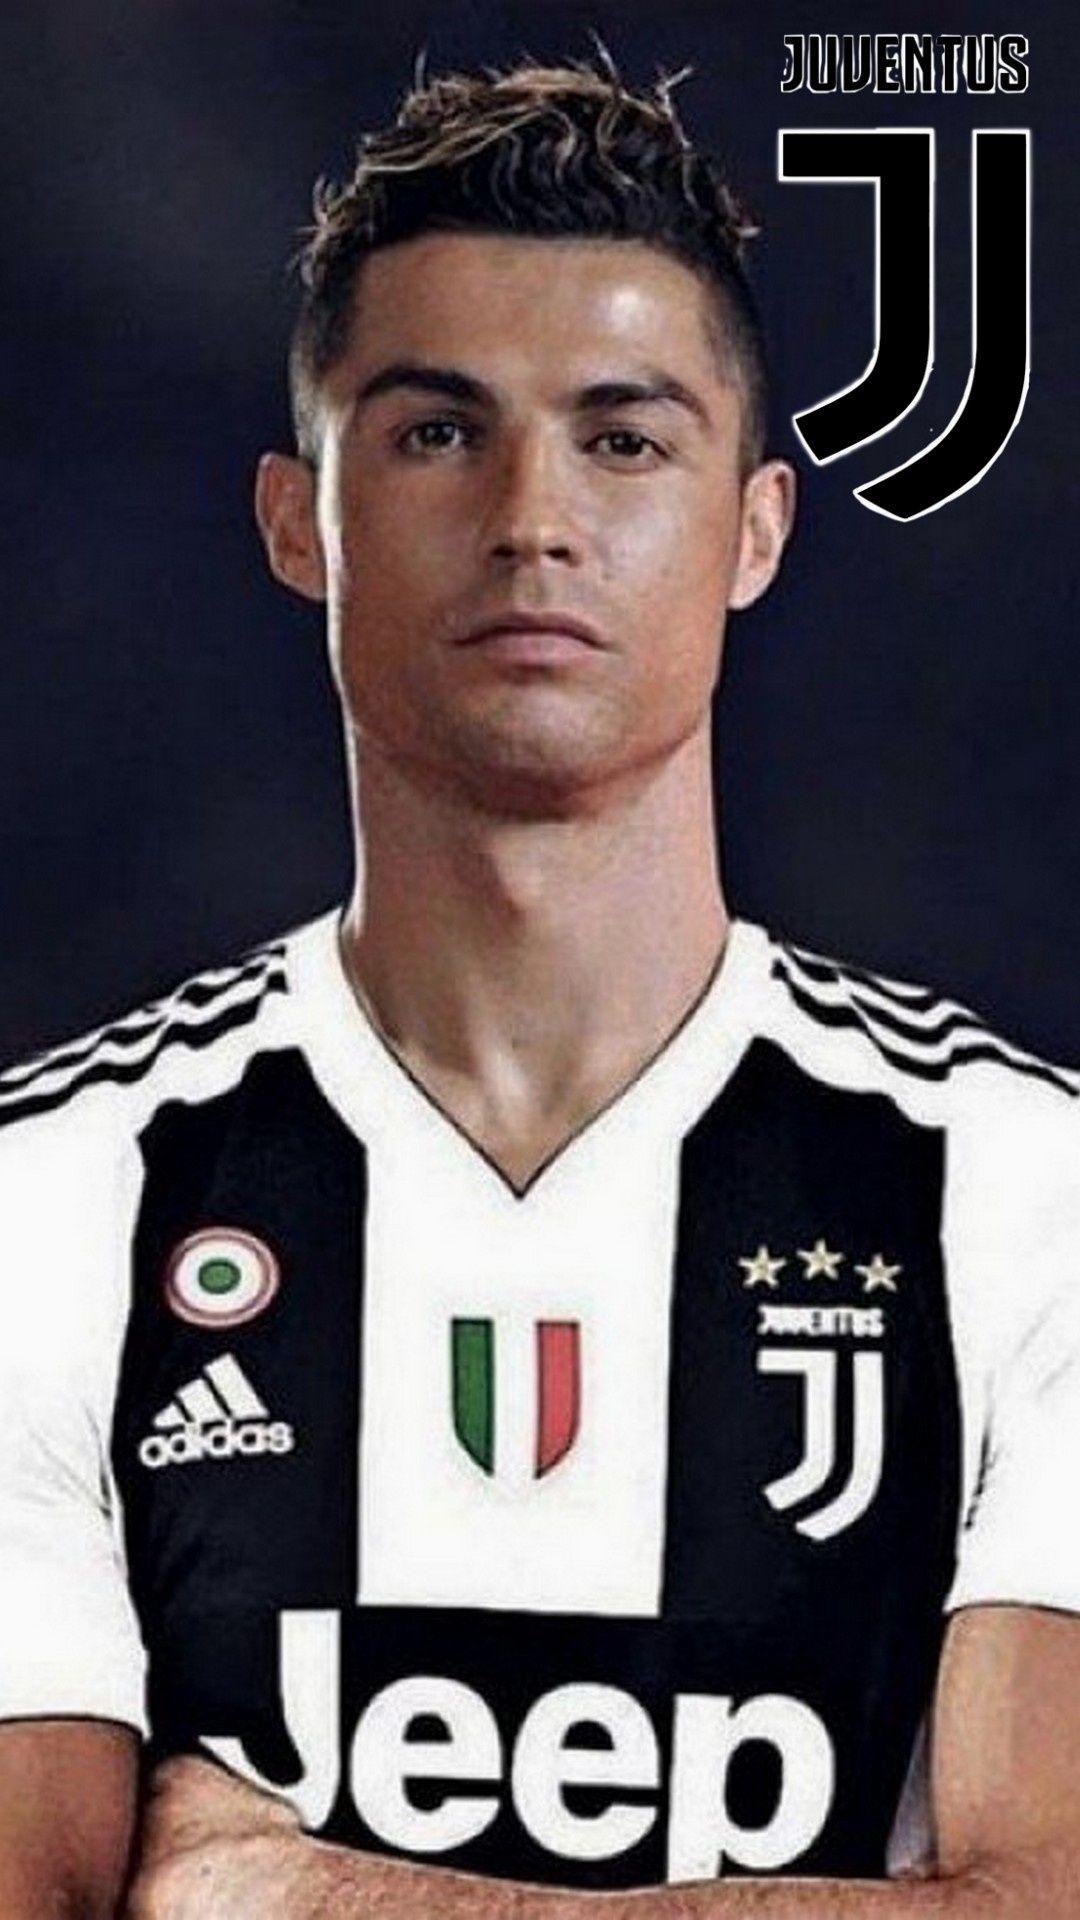 Awesome Wallpaper Cristiano Ronaldo Juventus 2018